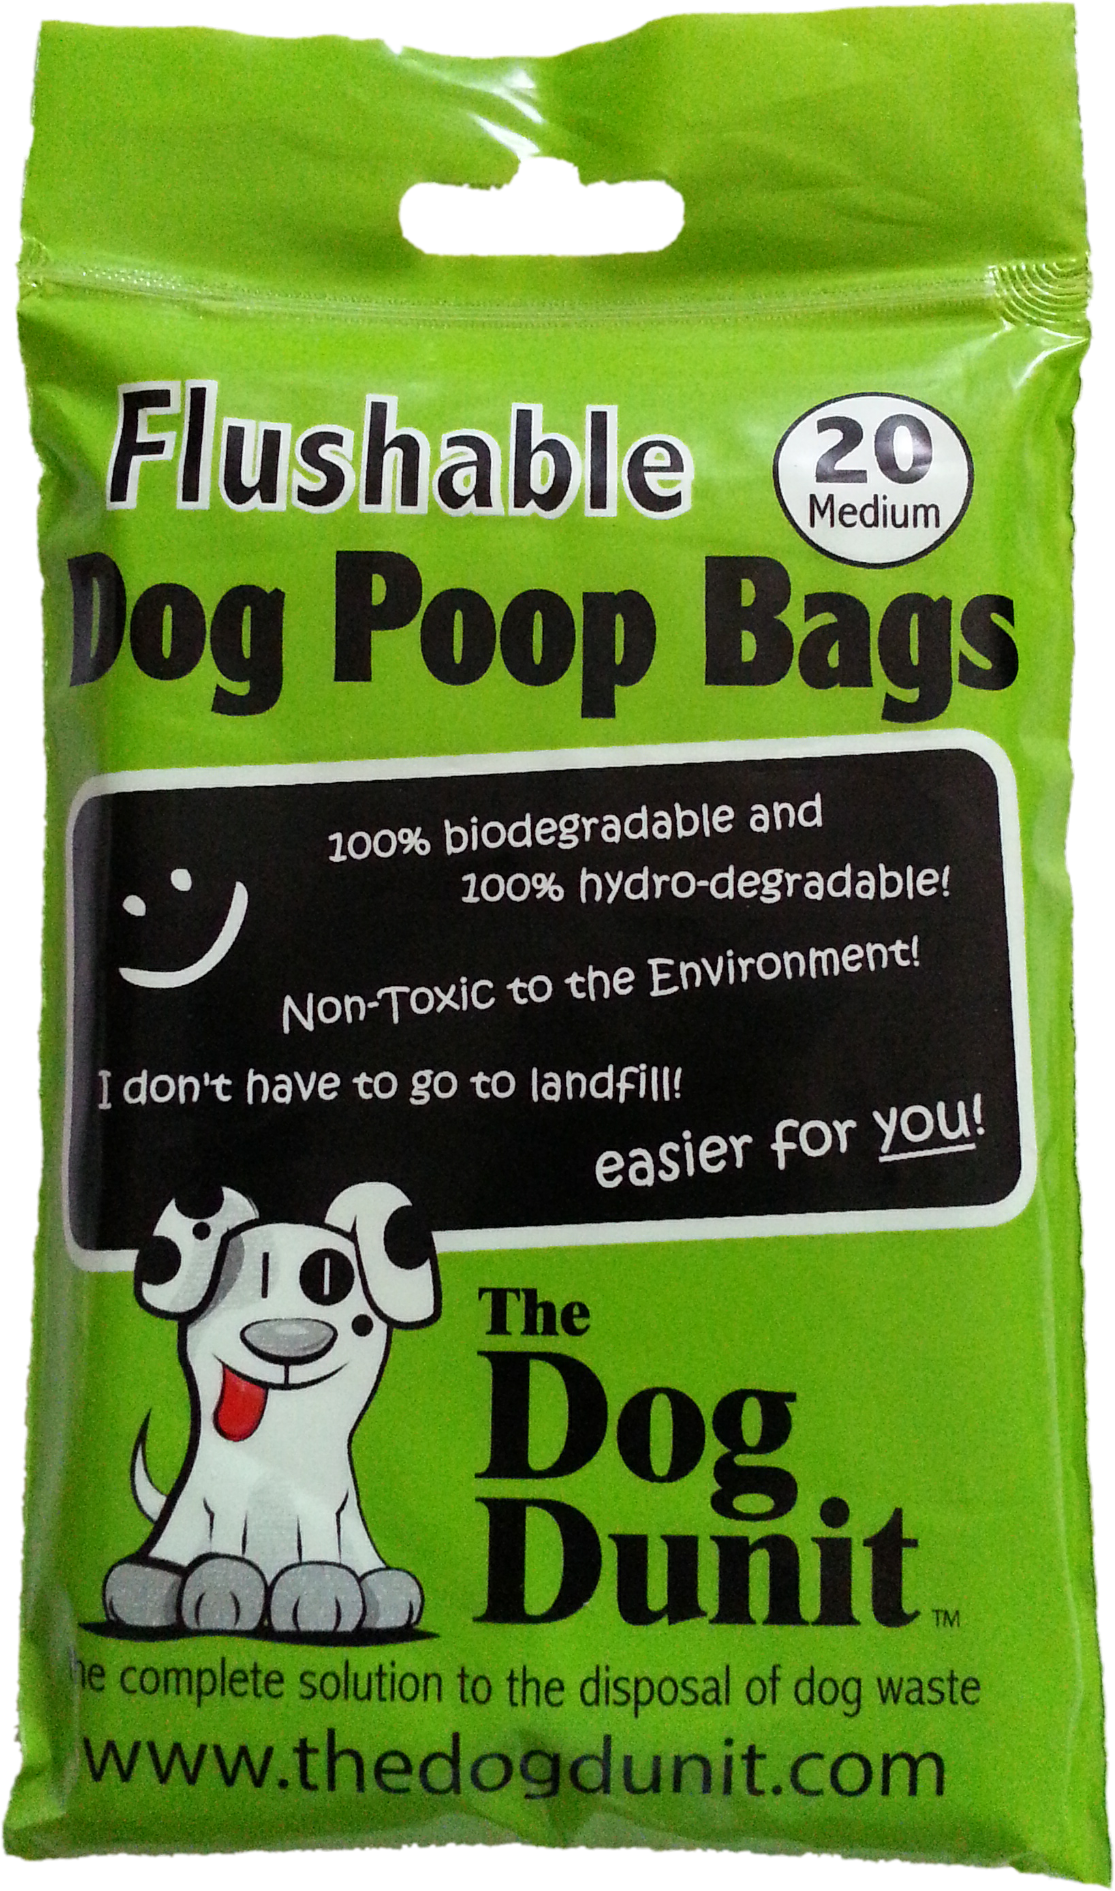 Compostable vs Biodegradable vs Flushable Dog Poop Bags